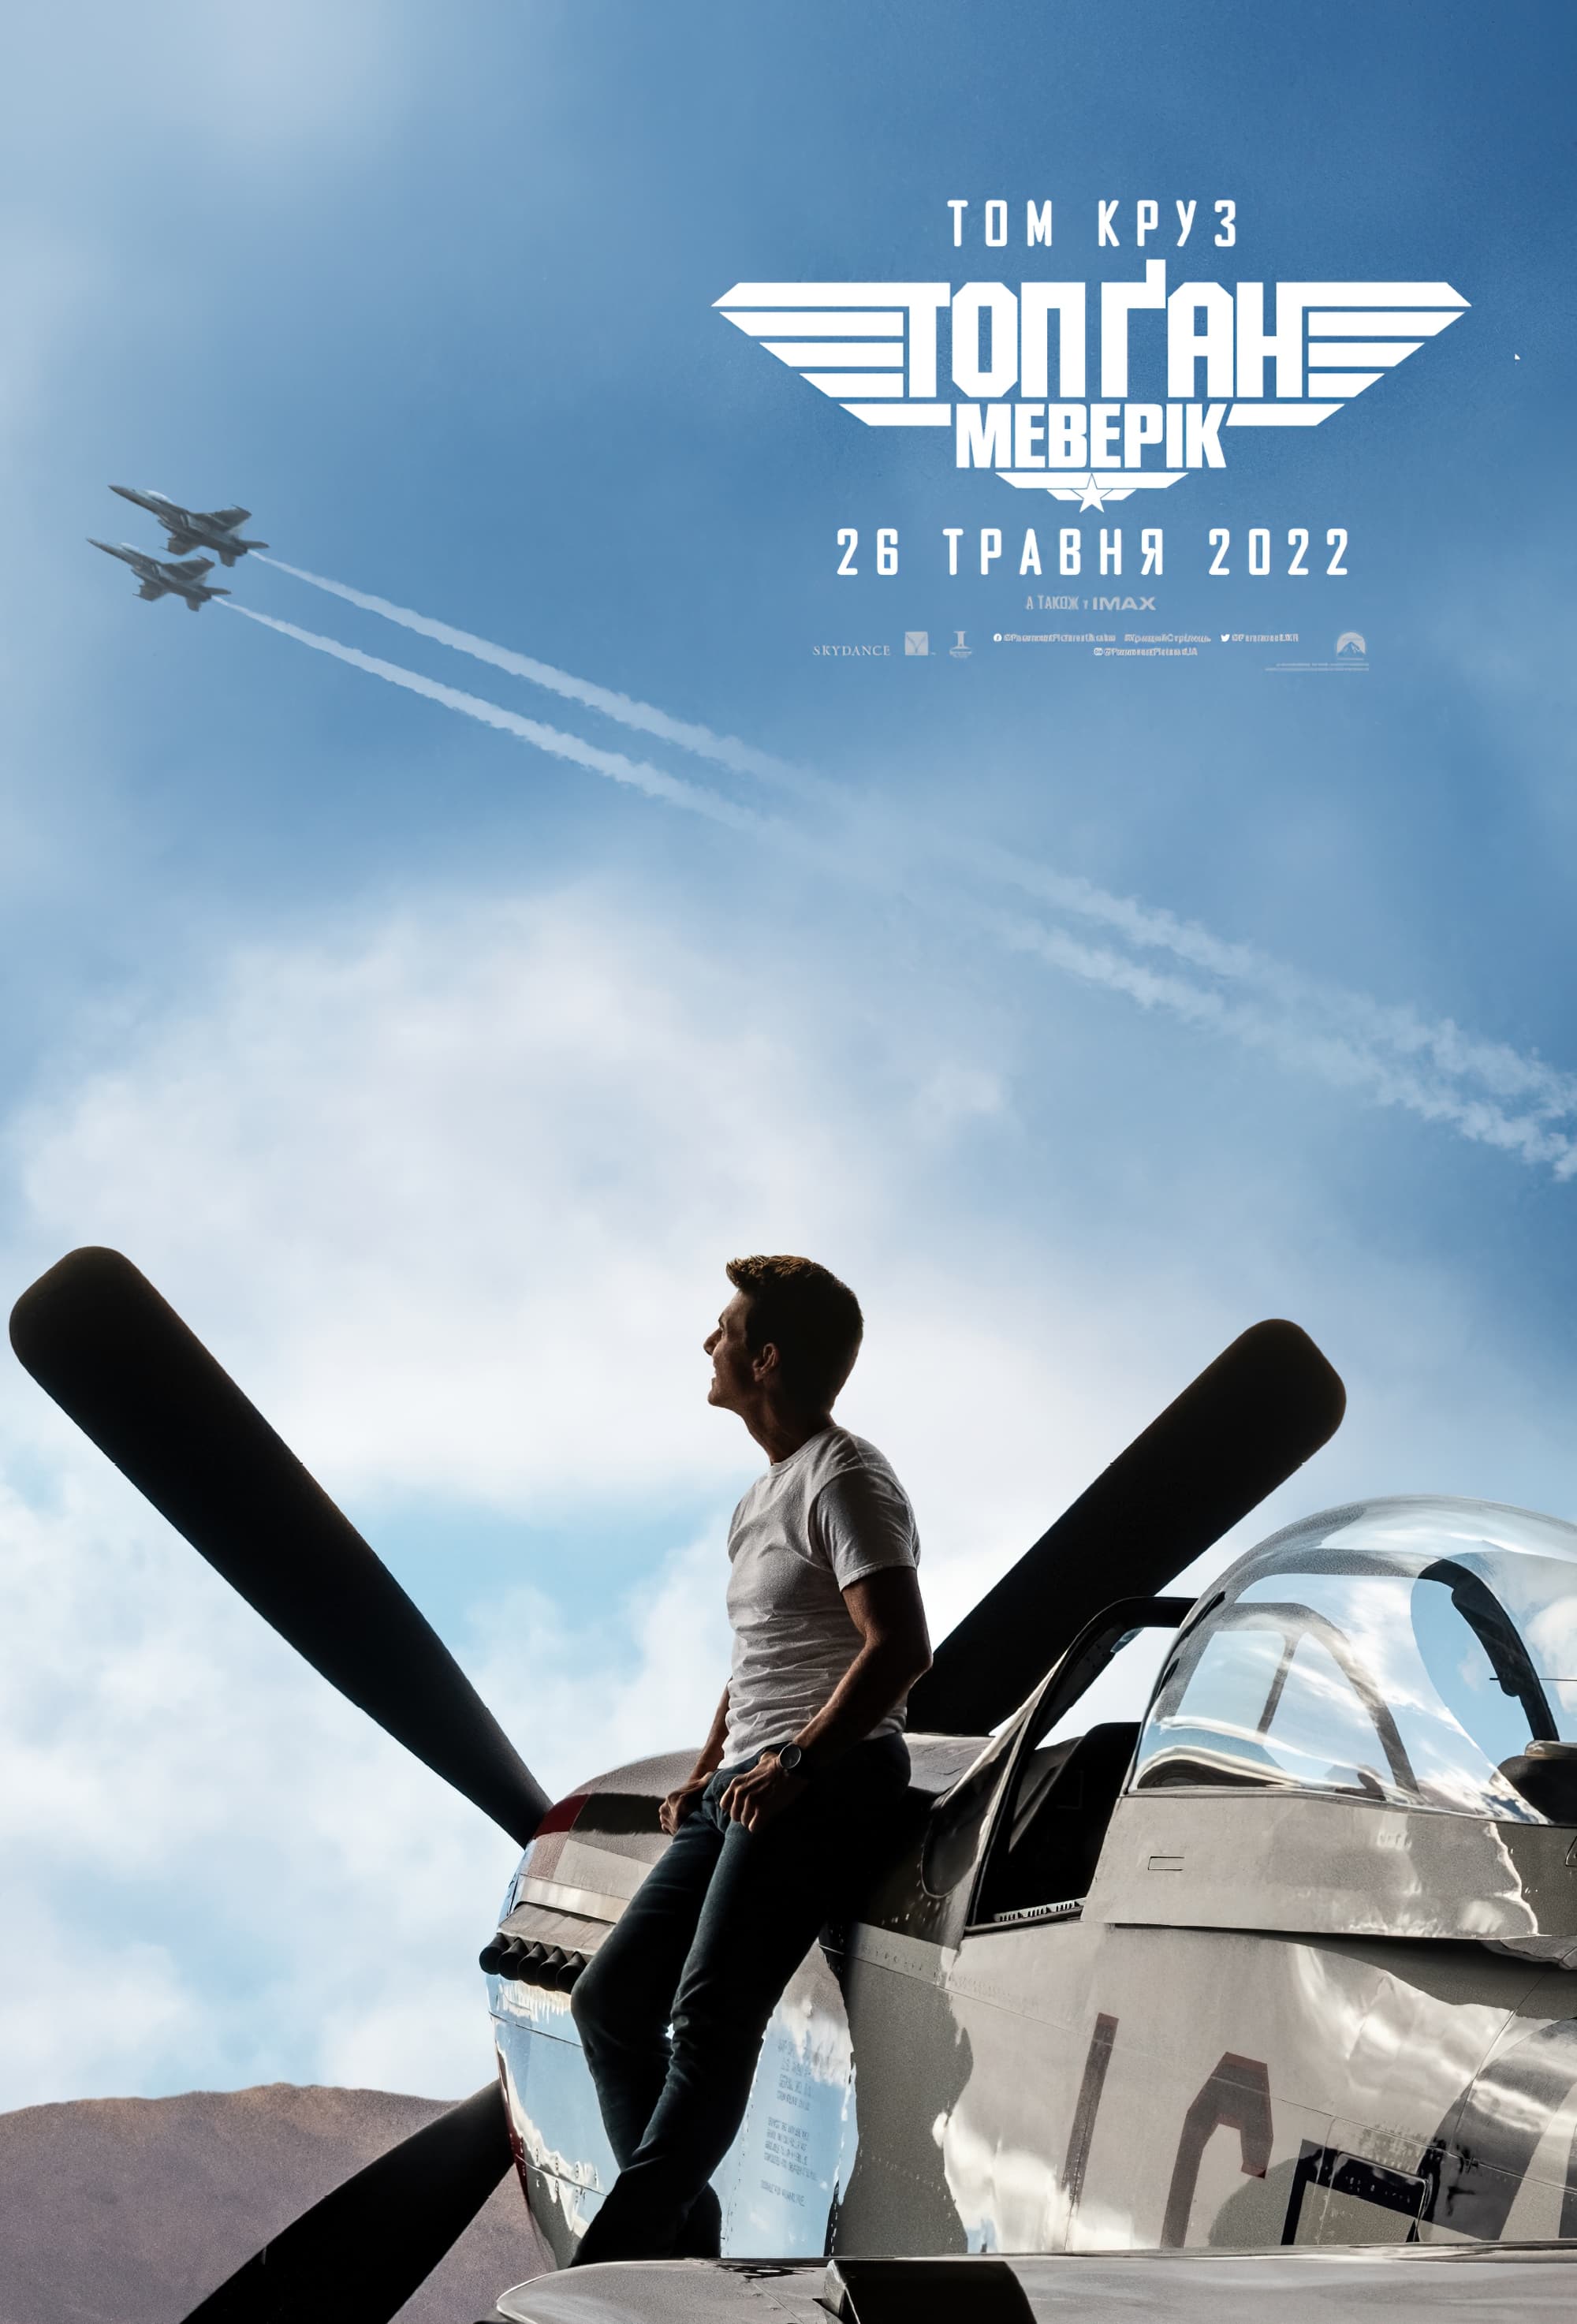 Poster and image movie Top Gun: Maverick